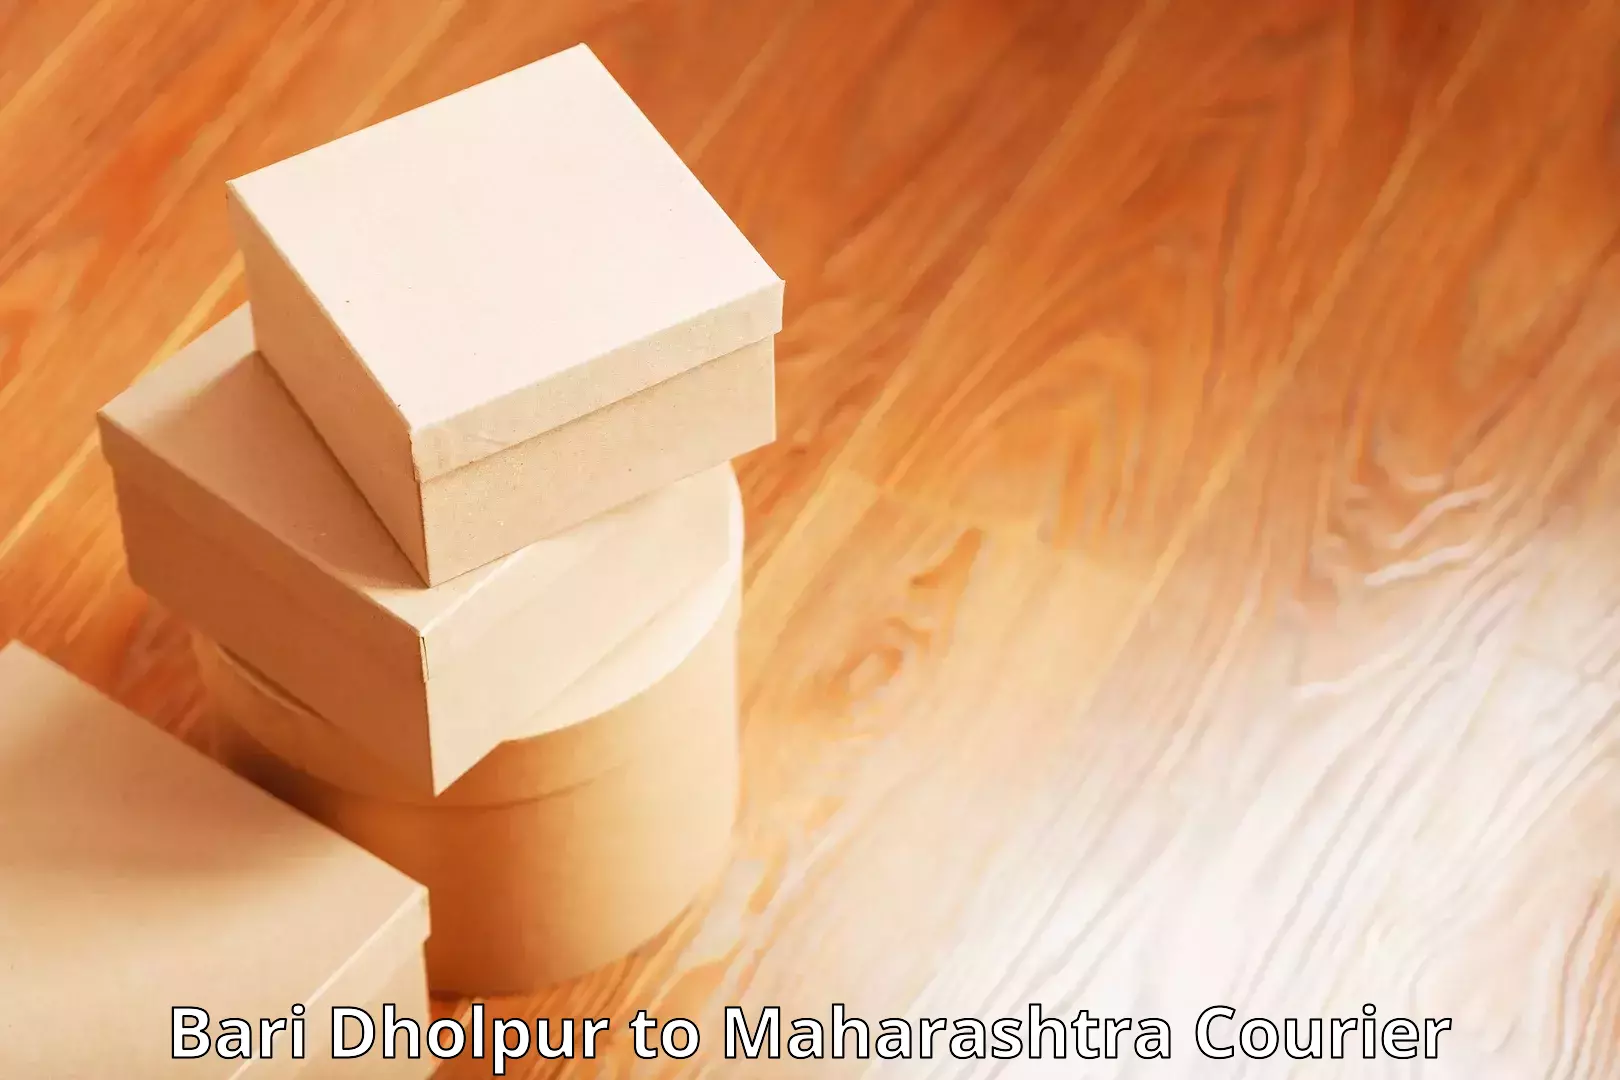 Custom courier packaging in Bari Dholpur to Akola